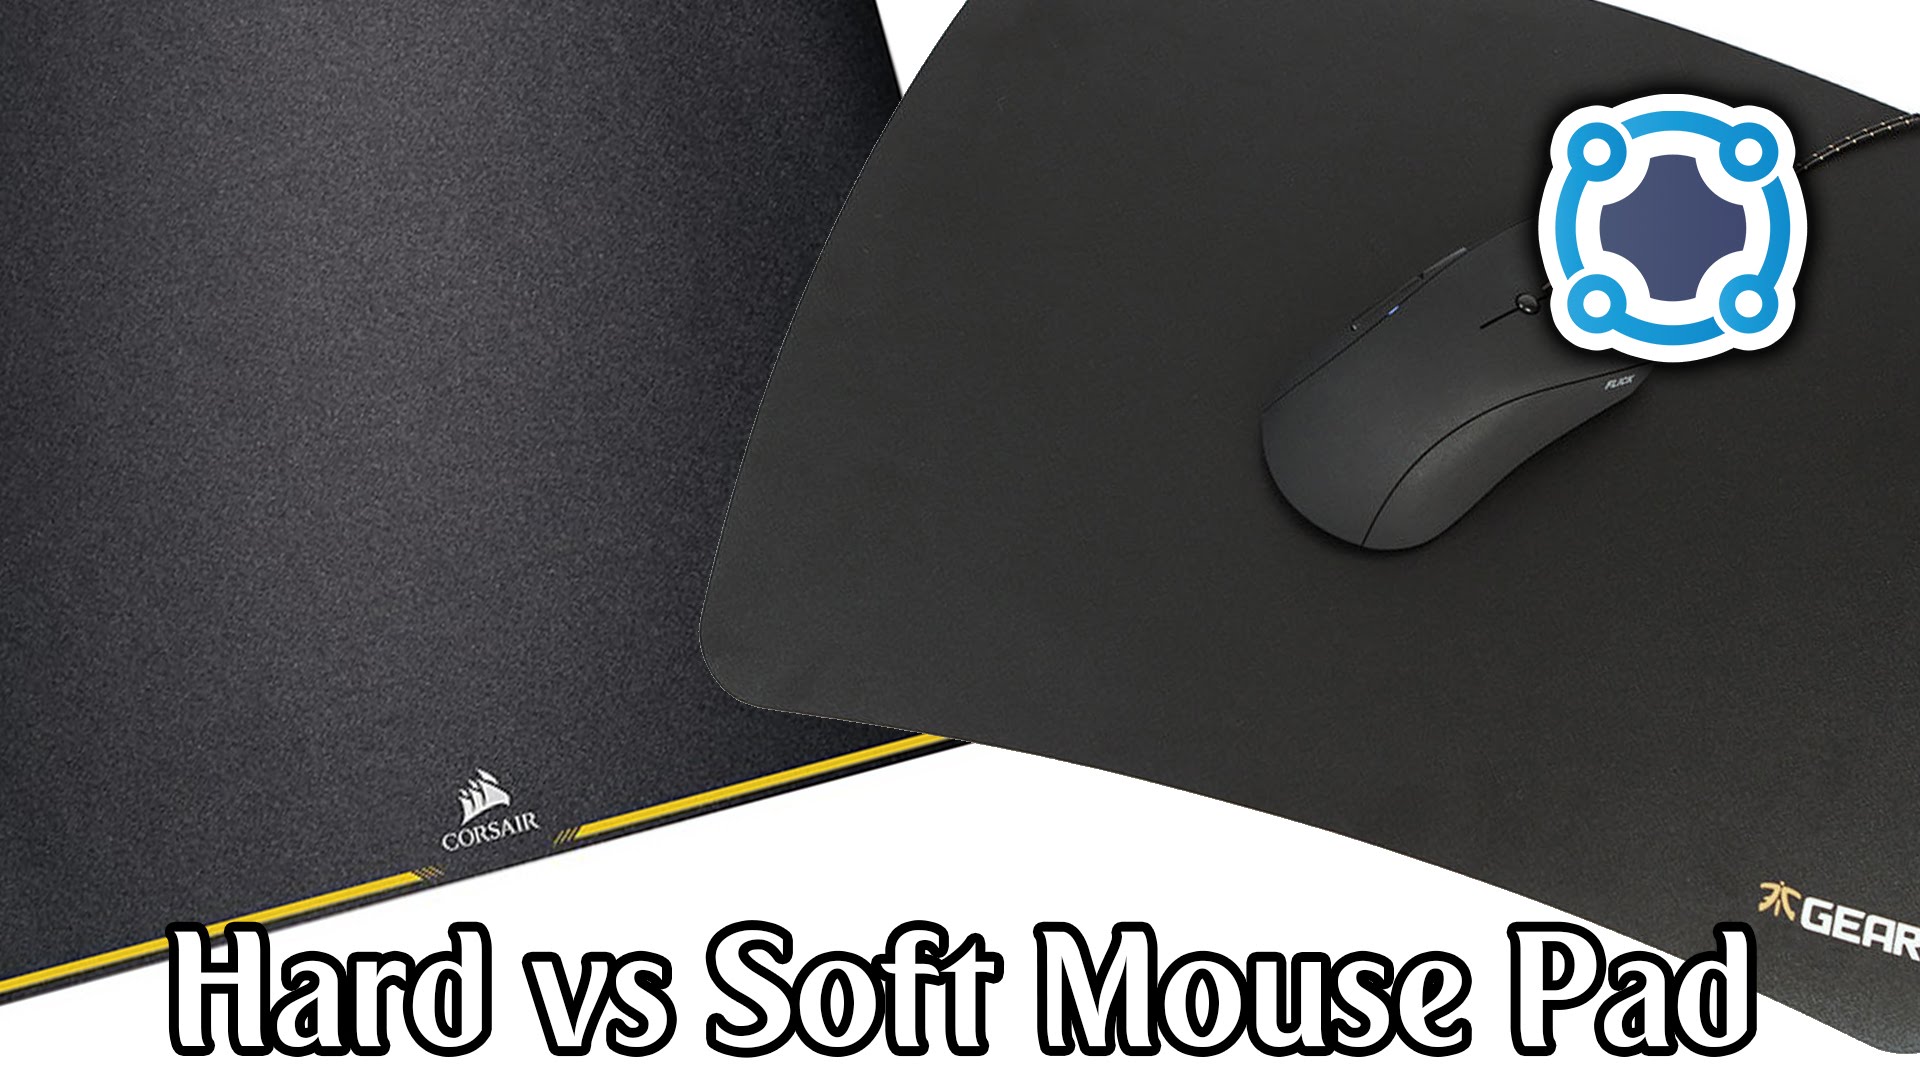 Hard vs Soft Mouse Pad